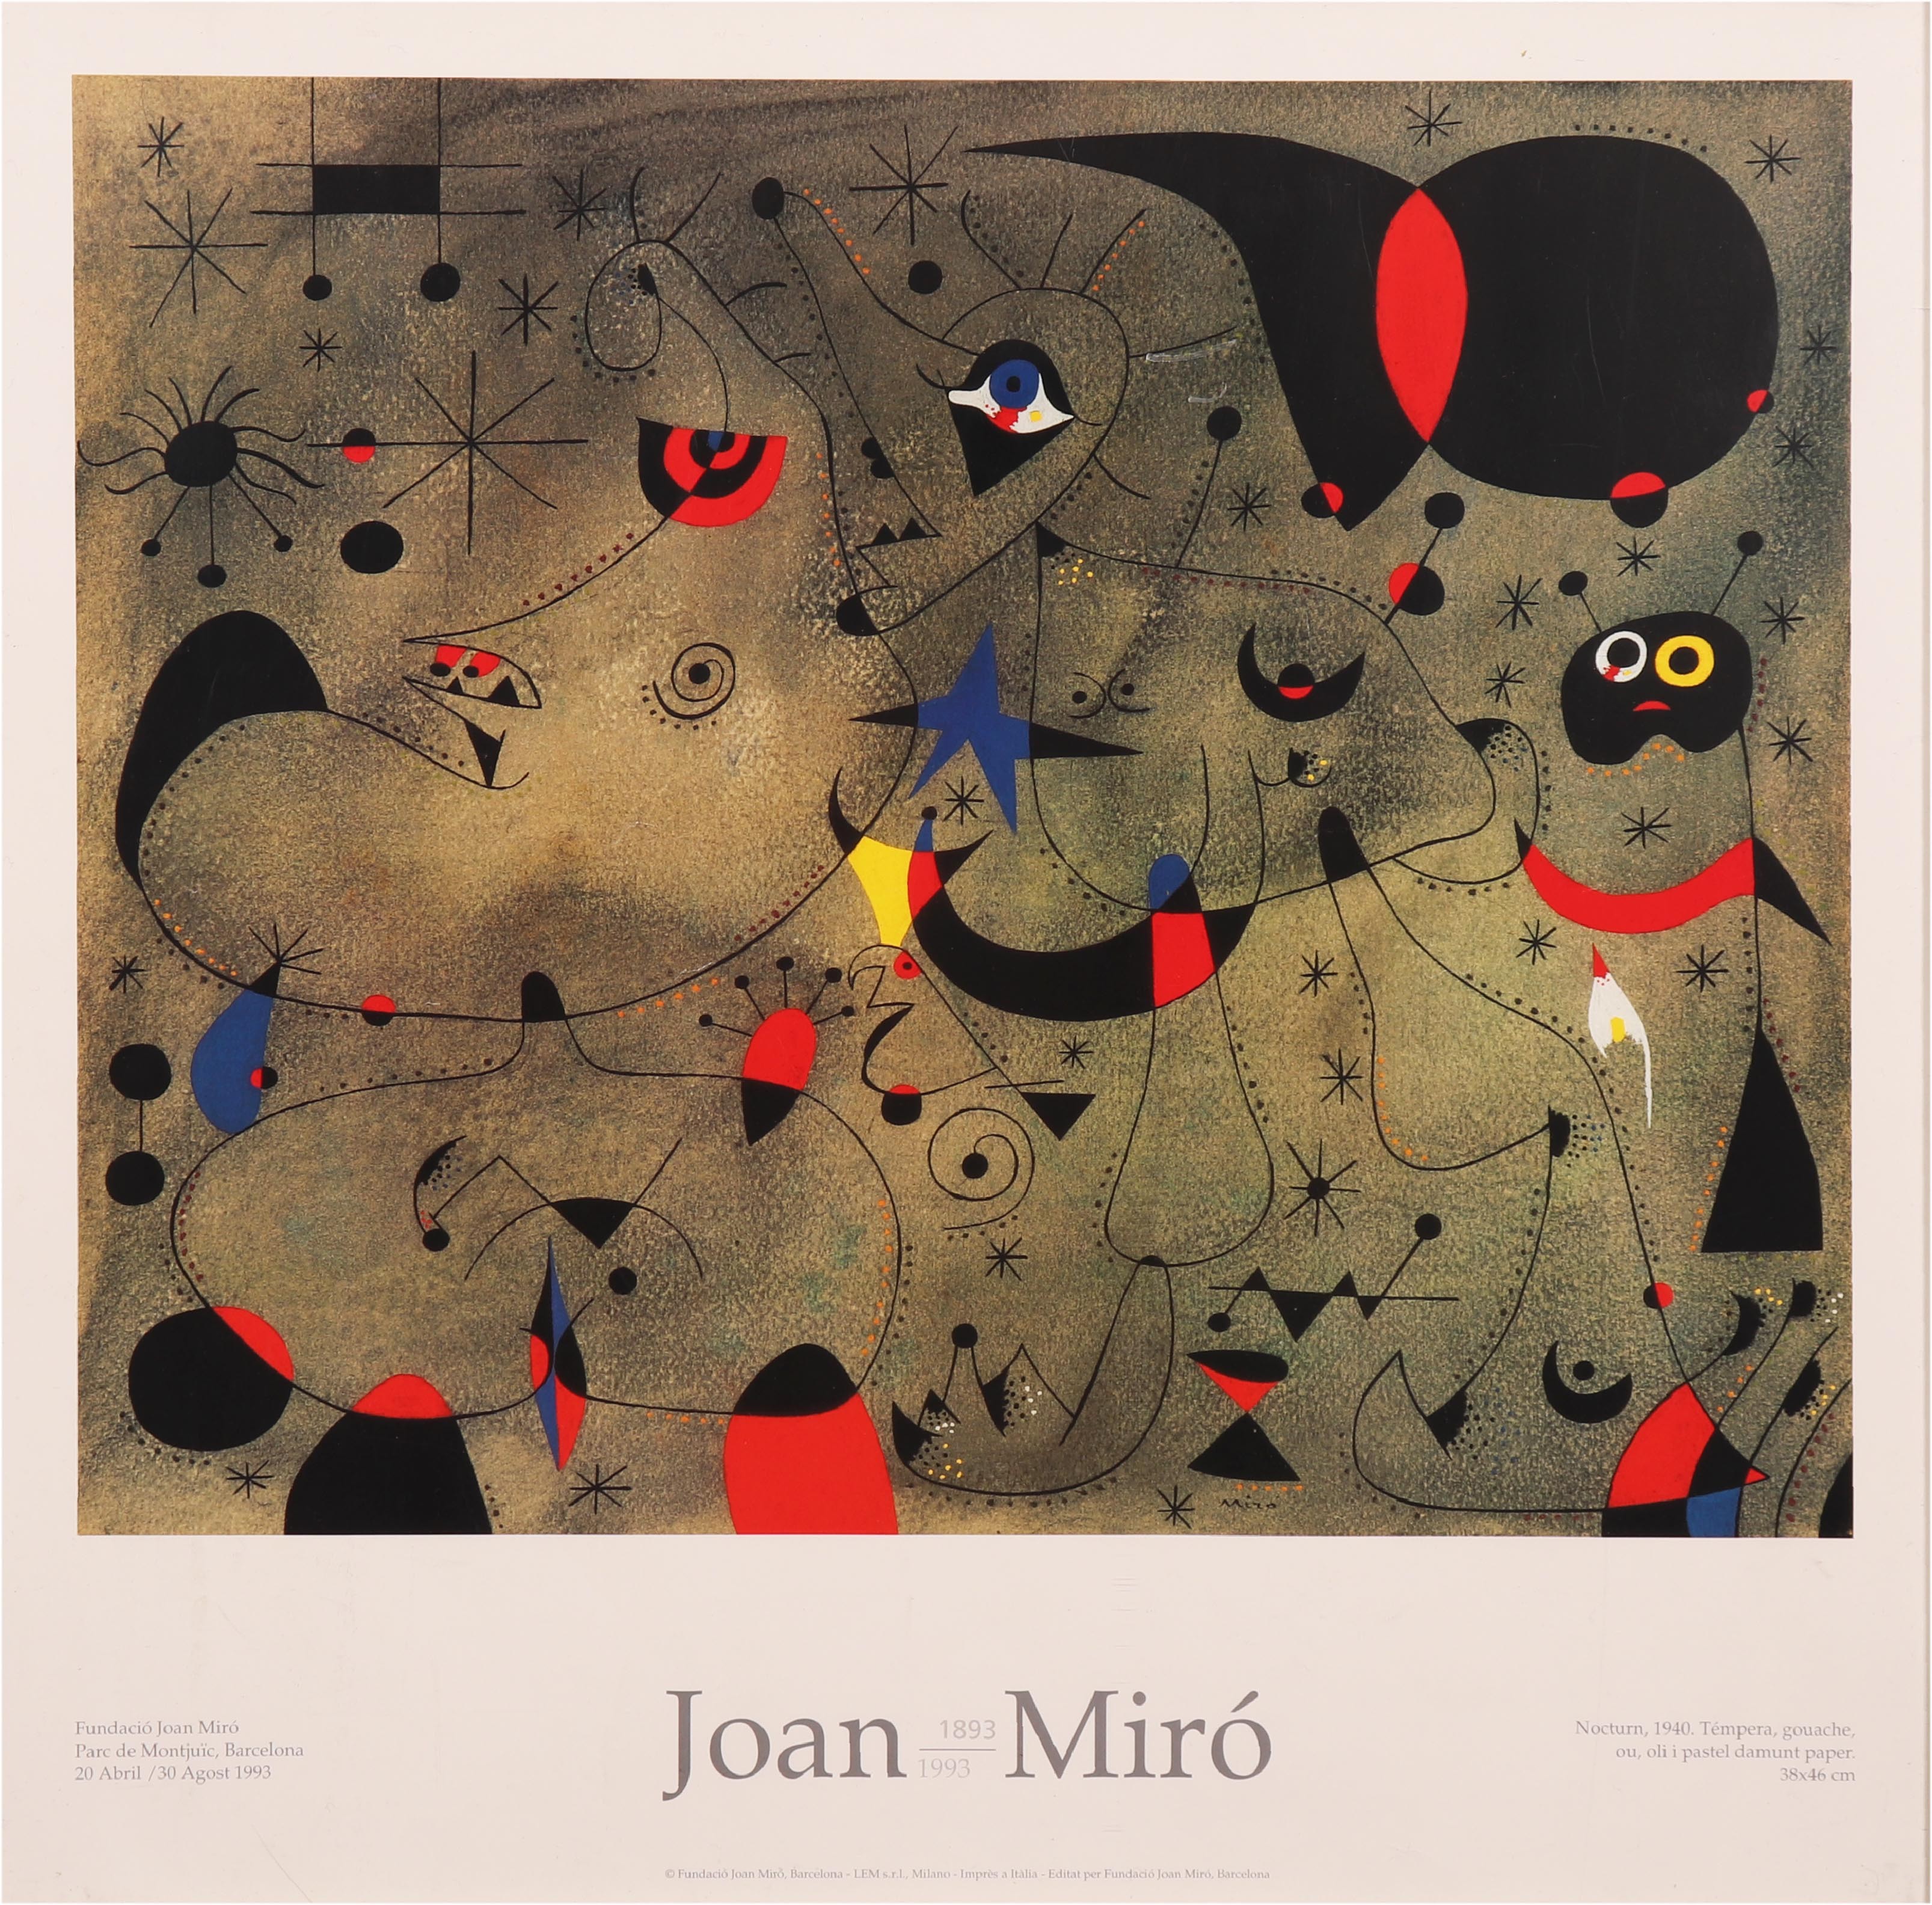 JOAN MIRÓ (1893-1983)